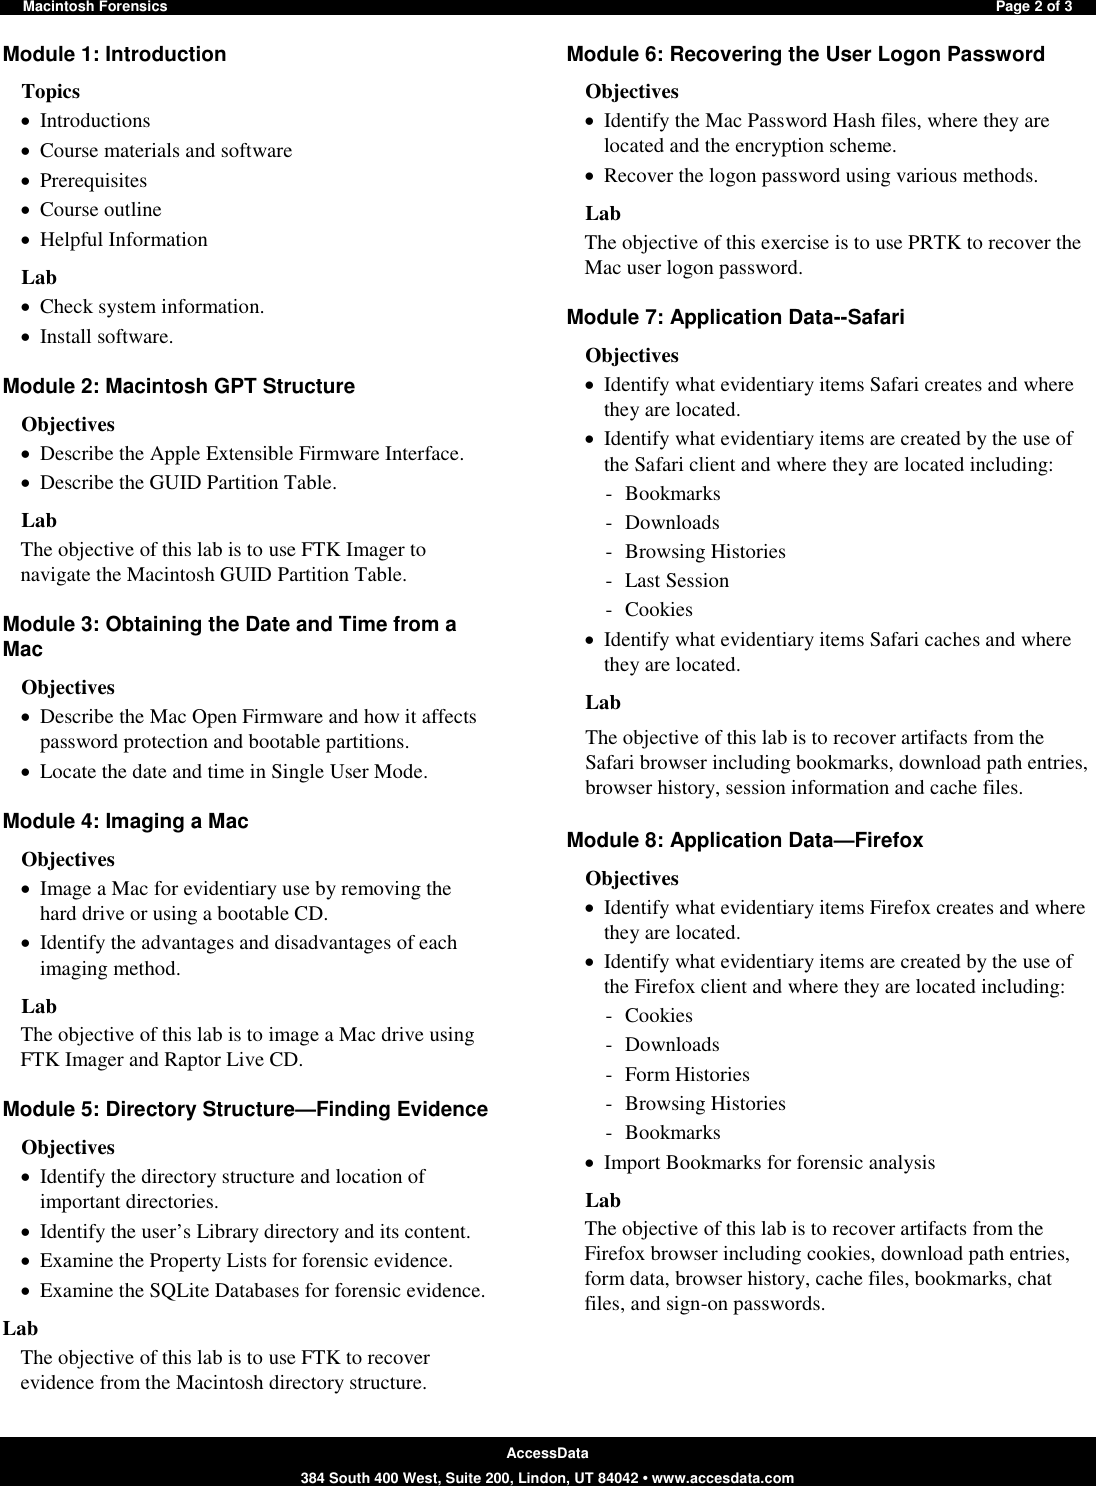 Page 2 of 3 - AccessData Forensic BootCamp  Macintosh Forensics Syllabus